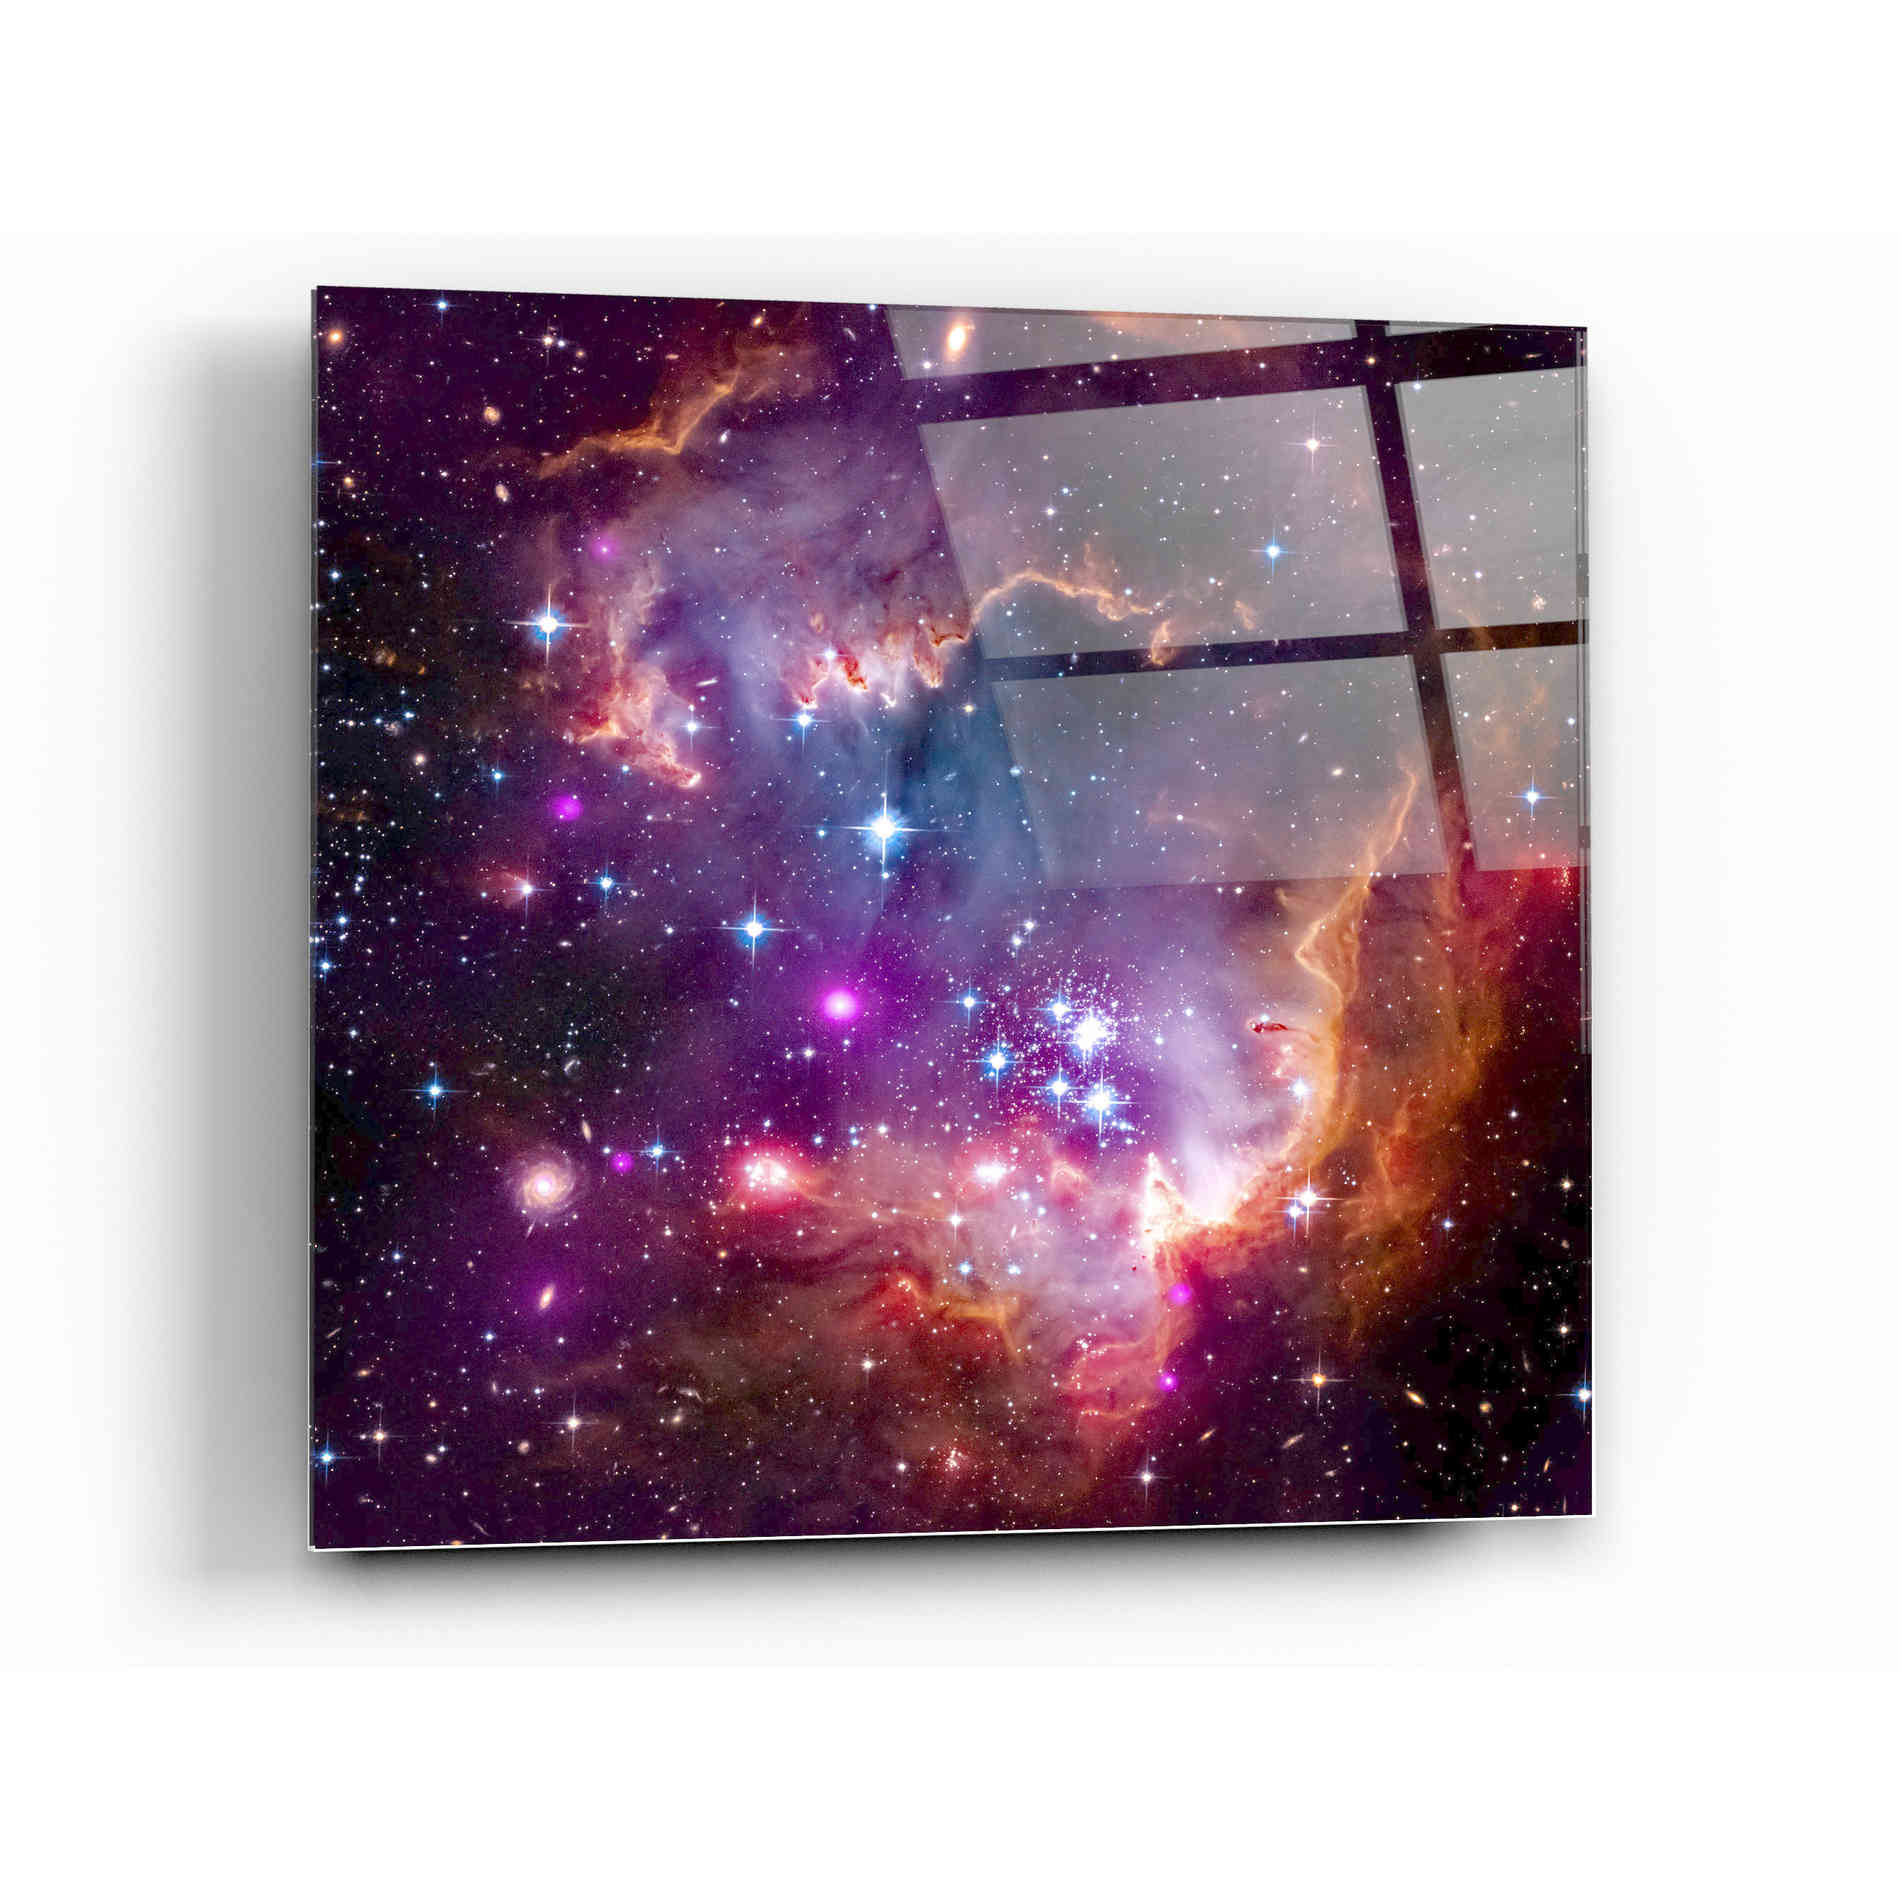 Epic Art "Magellanic Cloud" Hubble Space Telescope Acrylic Glass Wall Art,12x12